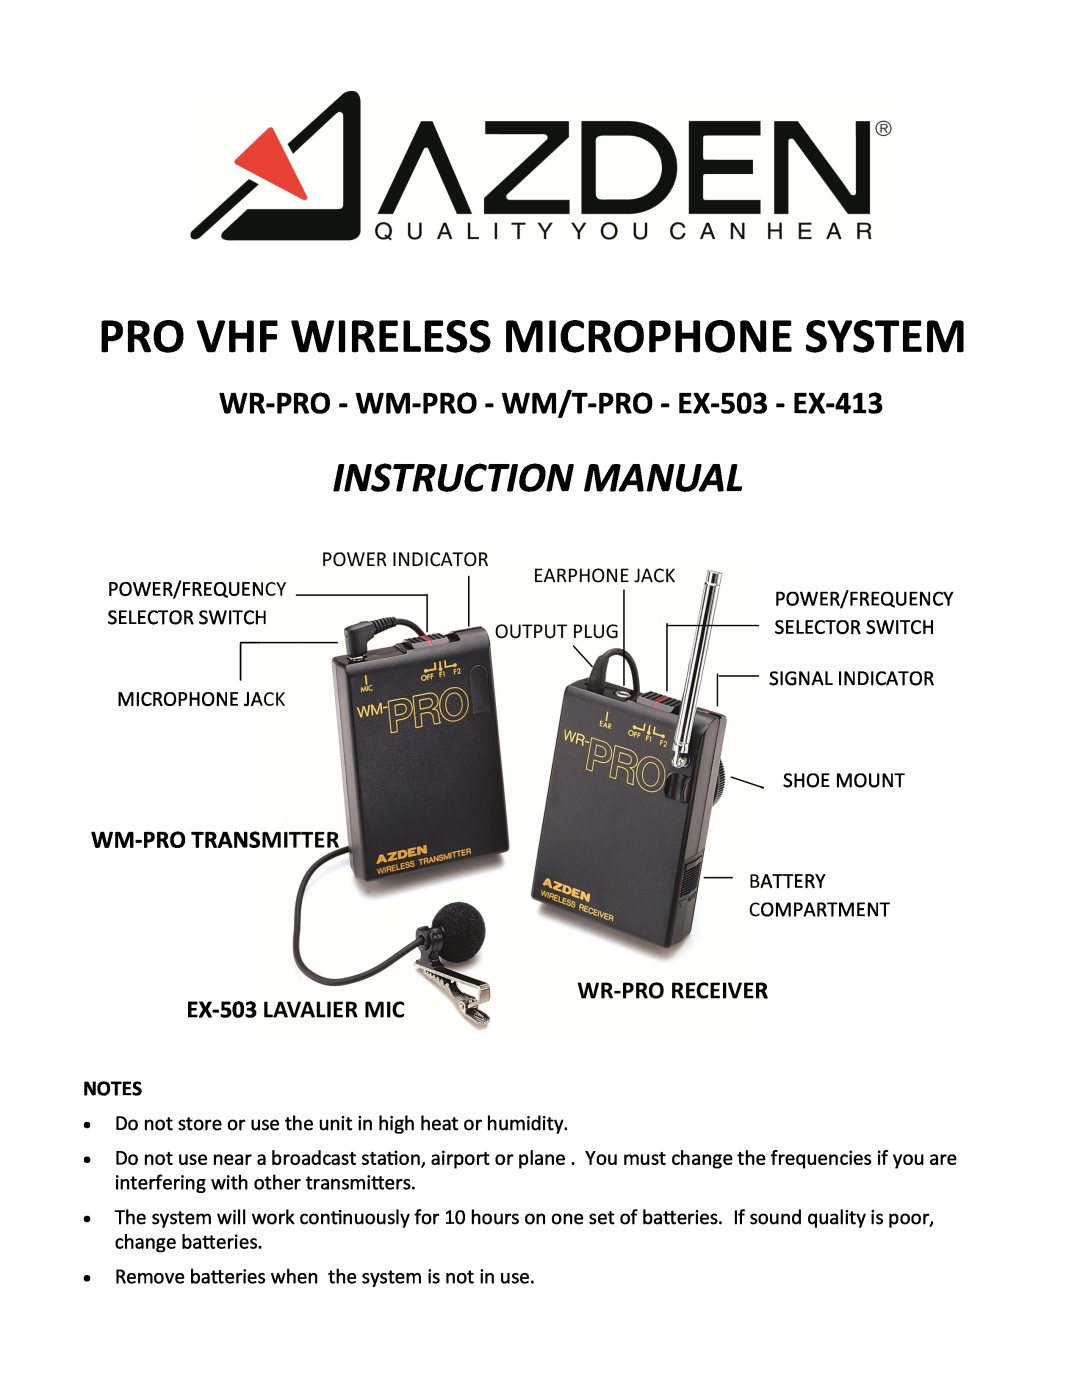 Azden WLTPRO instruction manual Wm-Protransmitter, EX-503LAVALIER MIC, Wr-Proreceiver, Pro Vhf Wireless Microphone System 